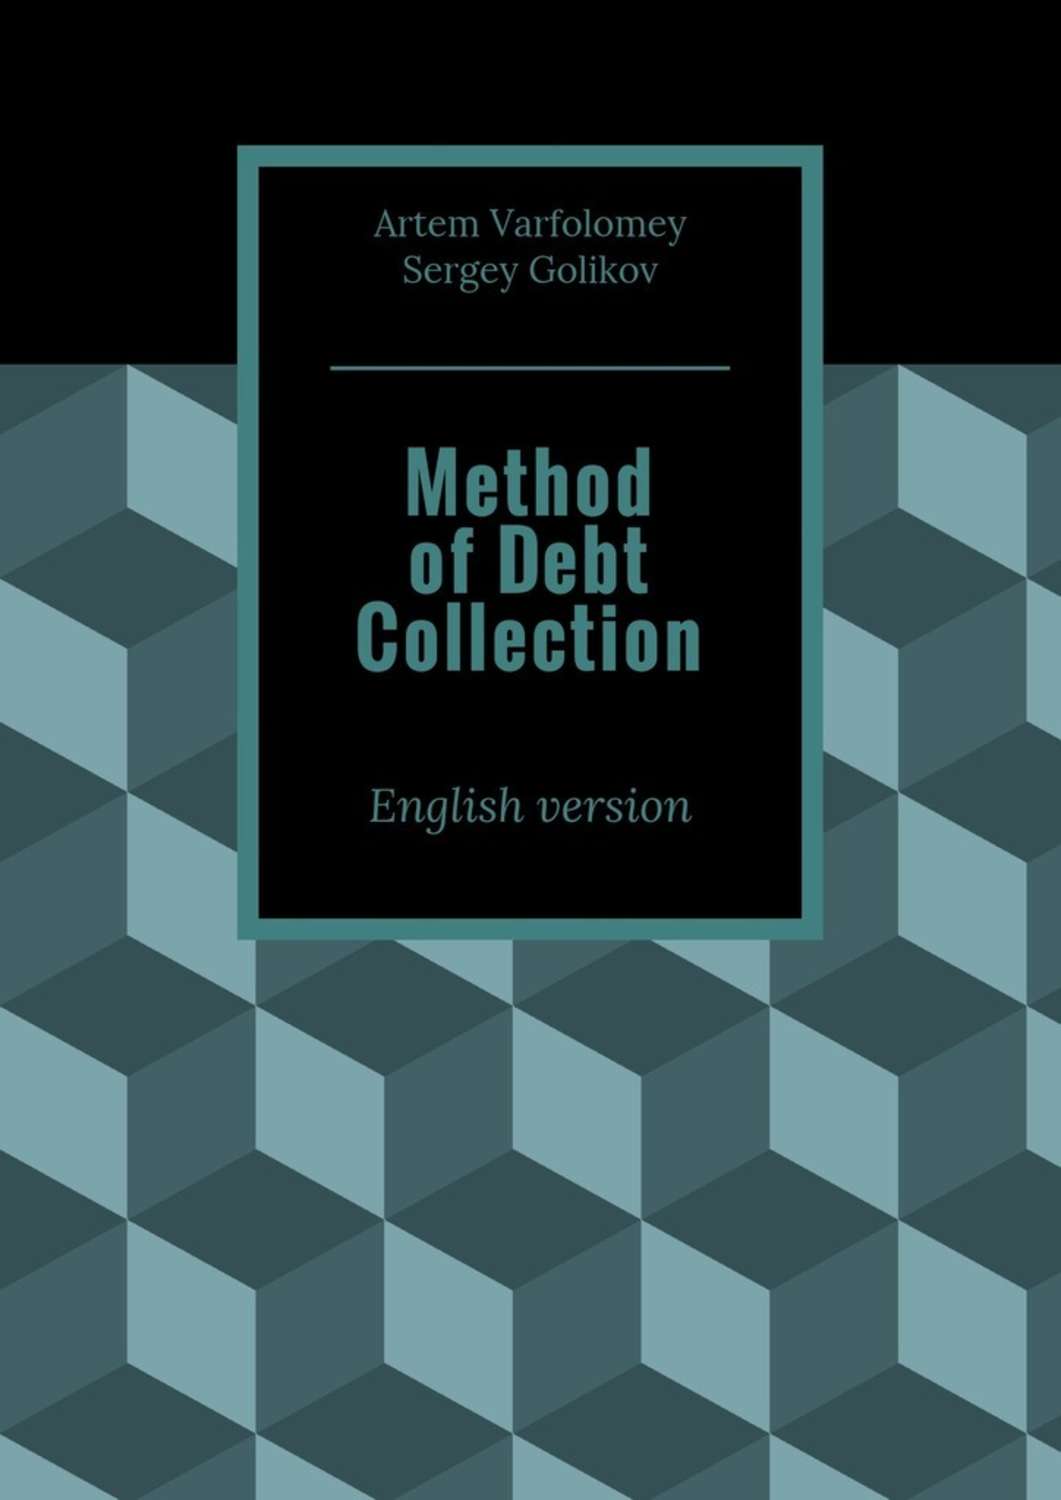 Method book. Debt collection. The skyscraper method book.